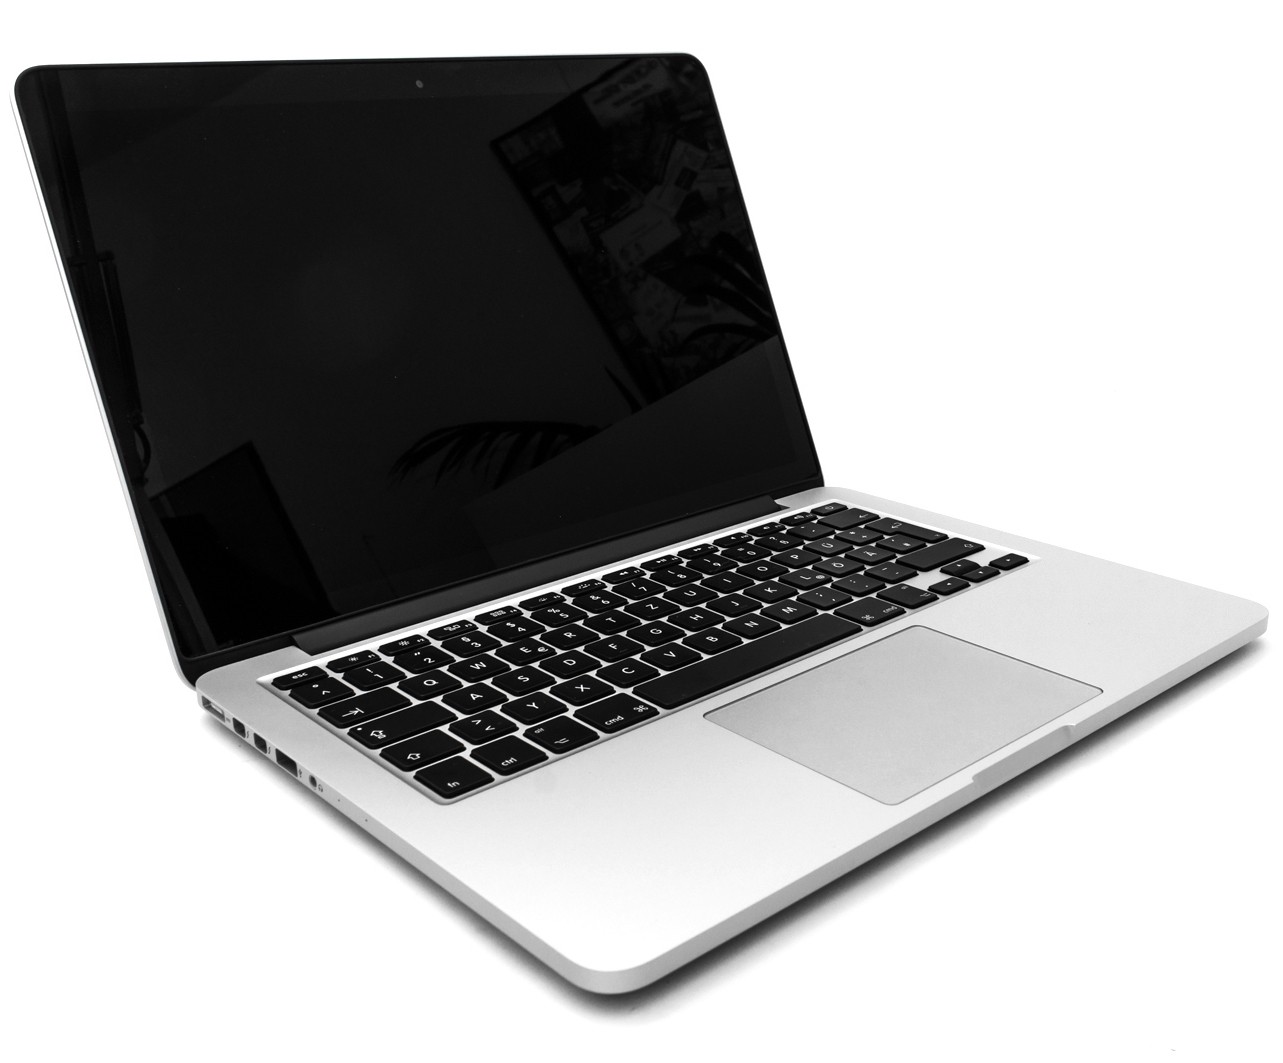 APL-MBP-A1278-i5-Apple MacBook Pro A1278 9,2 Refurbished 8GB RAM 500GB HDD Core i5 Processor 13.3" Widescreen 2012 OSX 10.11 -image